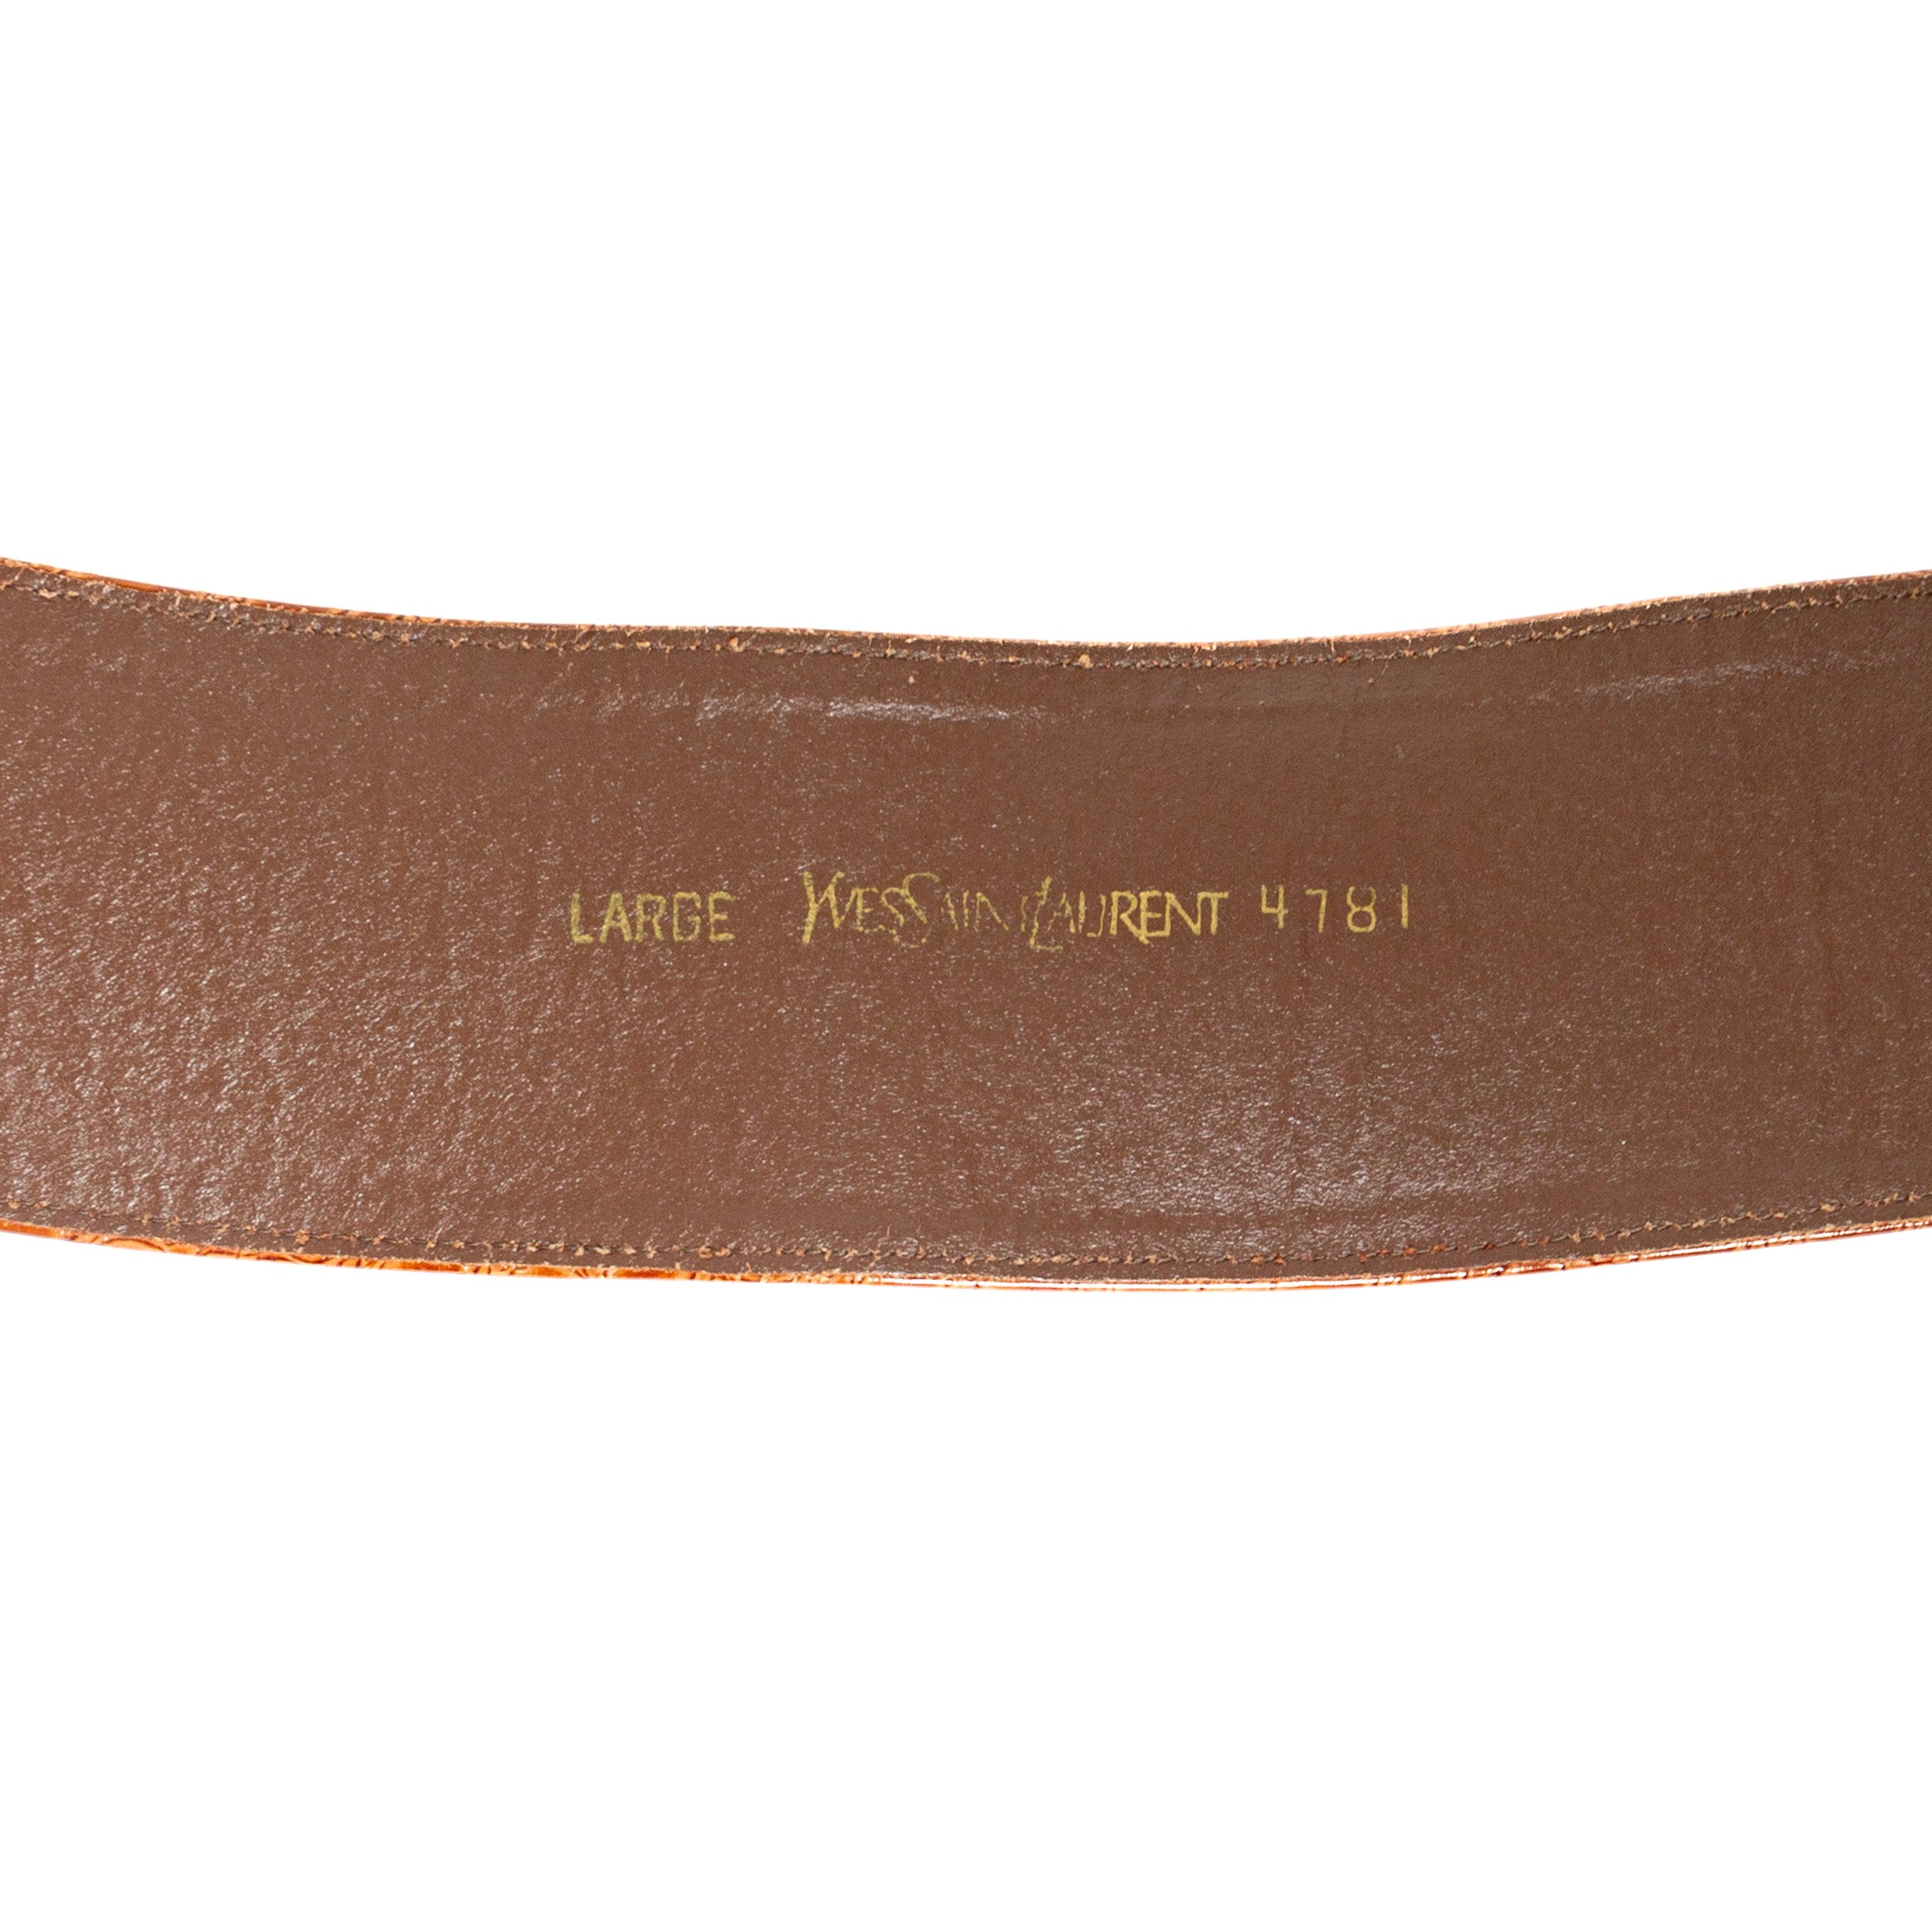 Vintage Brown Croc Embossed Leather Belt